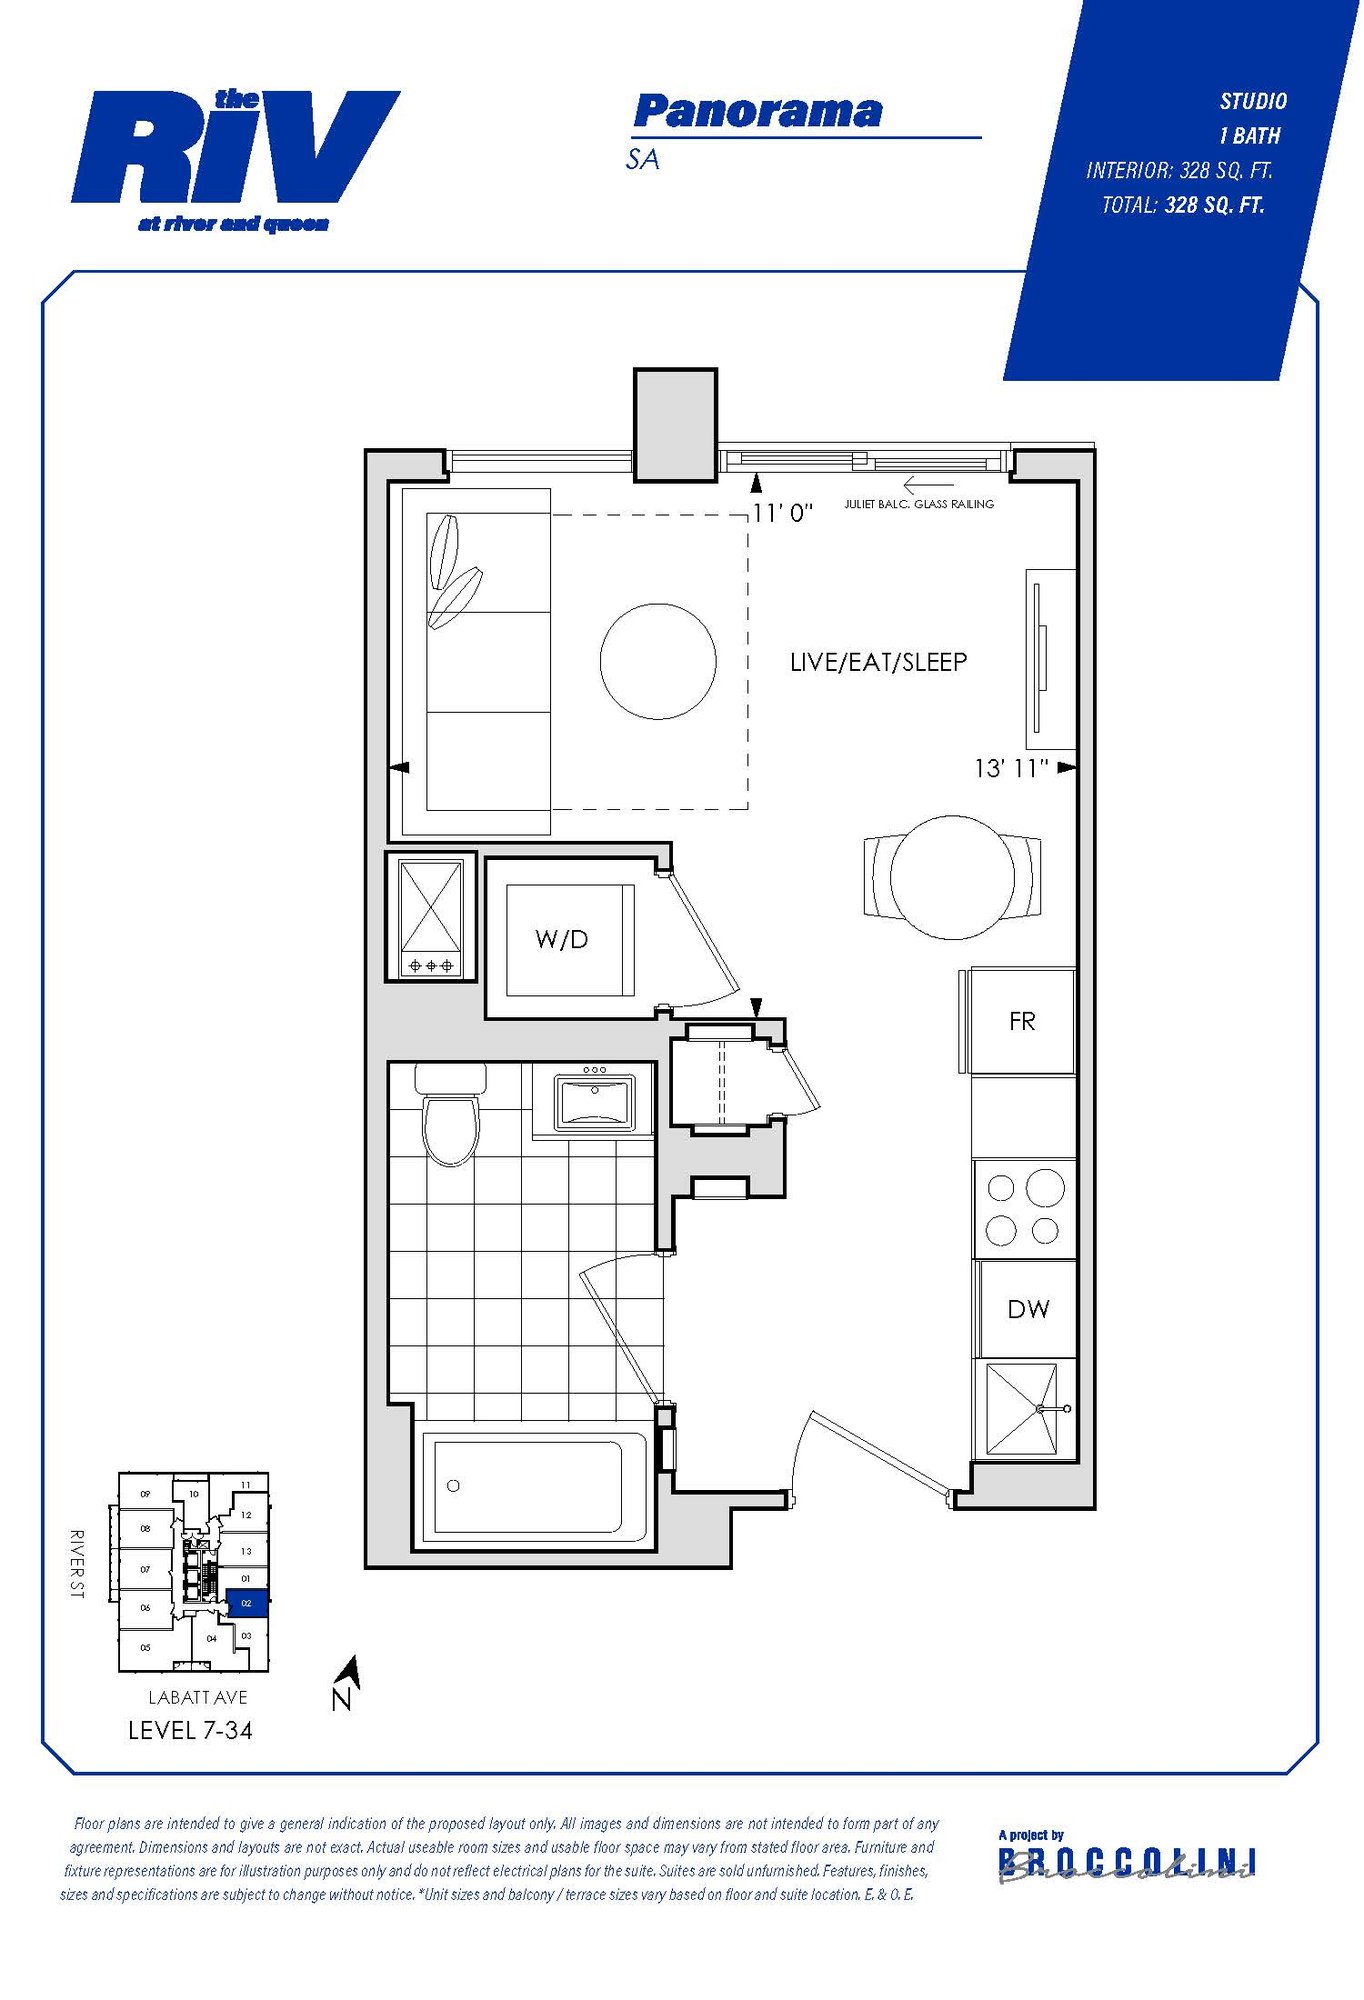 Floor plan for Panorama studio unit in The Riv